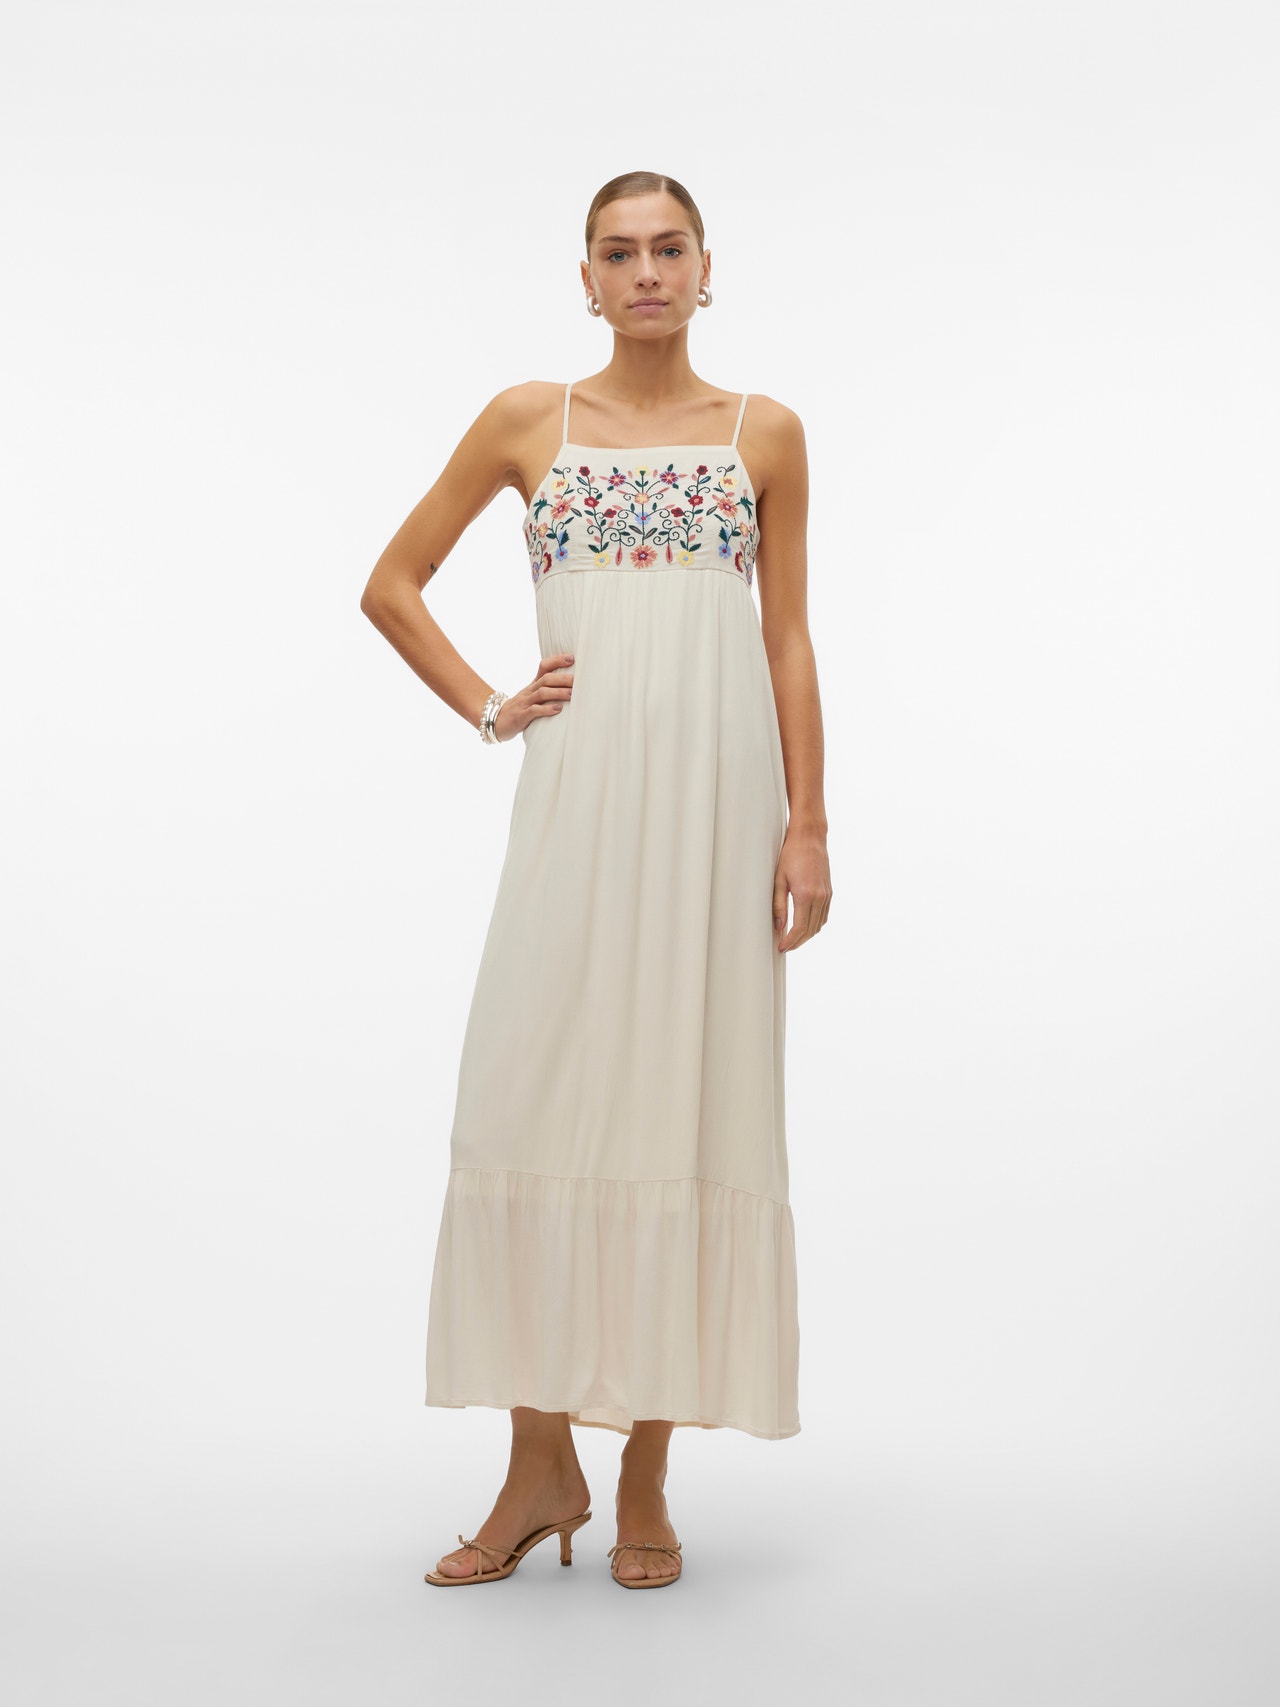 Vero Moda VMSINA Long dress -Birch - 10315077